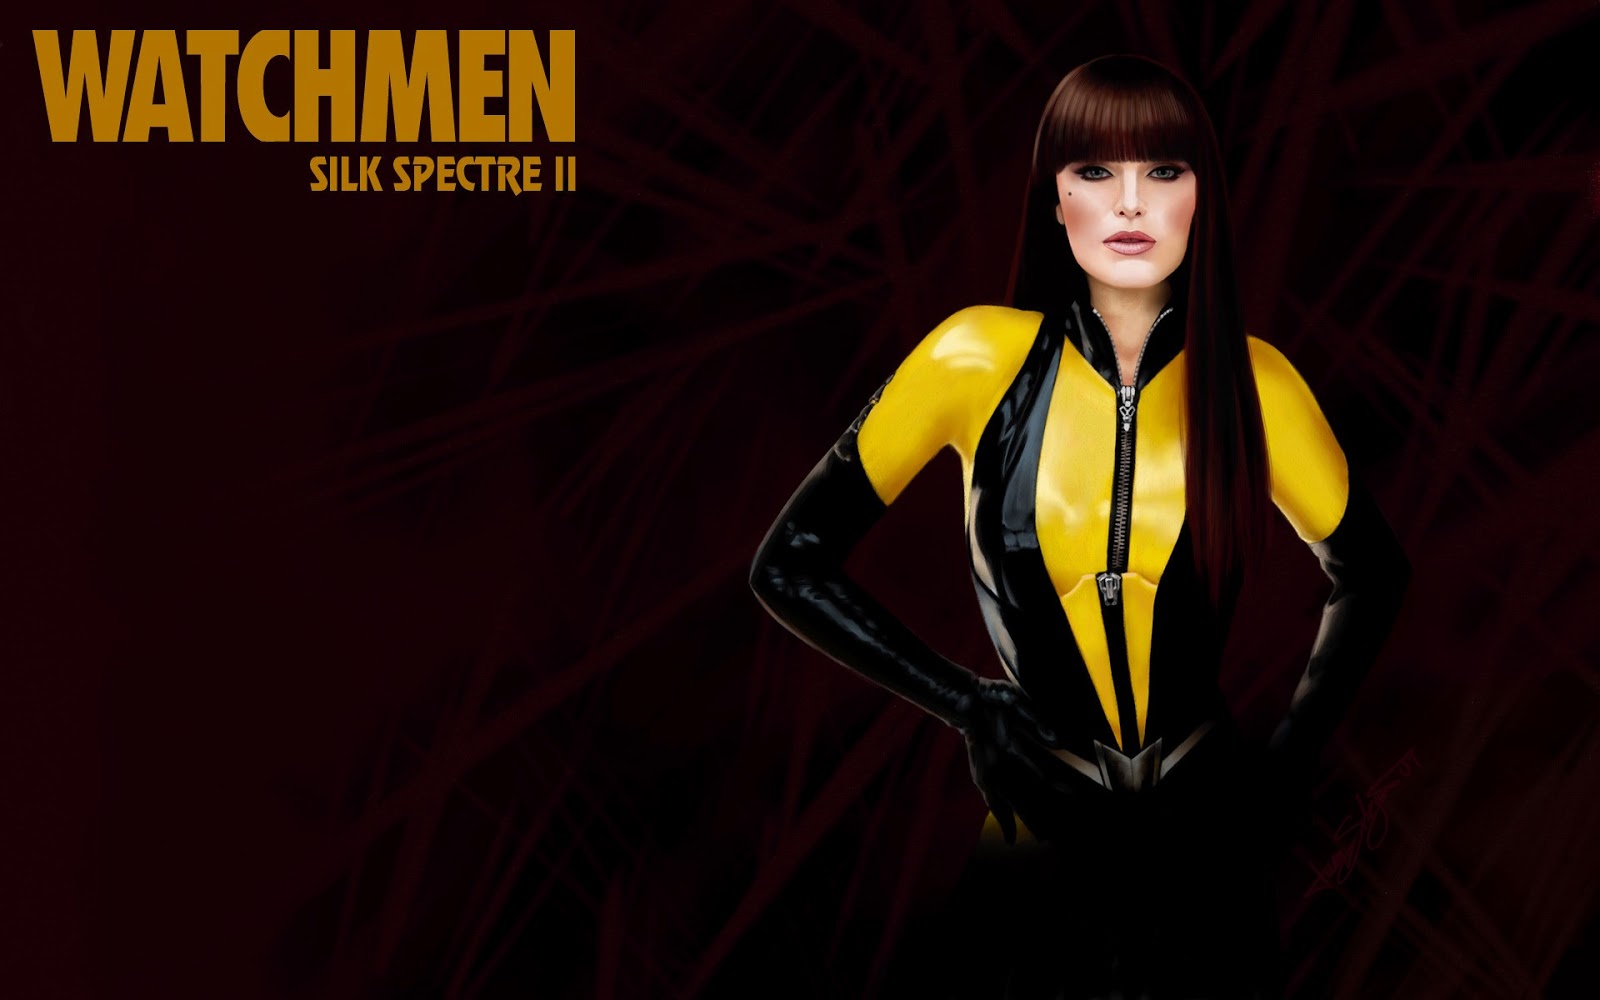 Malin Akerman Silk Spectre Watchmen Celebrityleatherfashions Spot